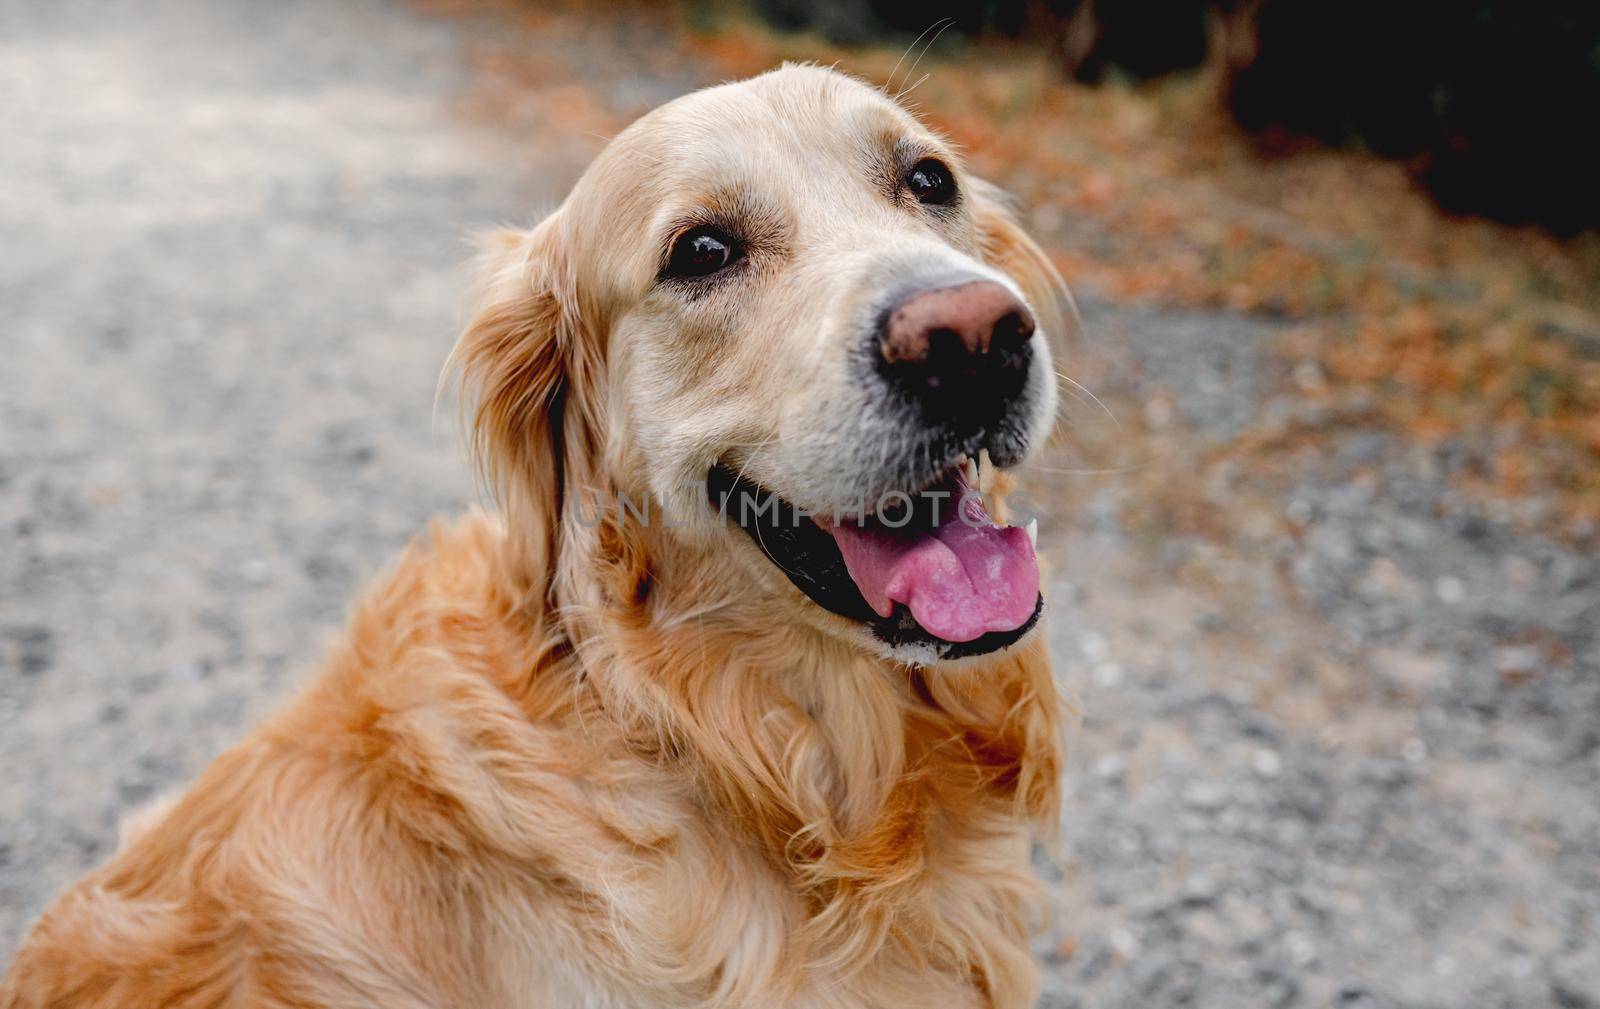 Golden retriever dog outdoors by tan4ikk1